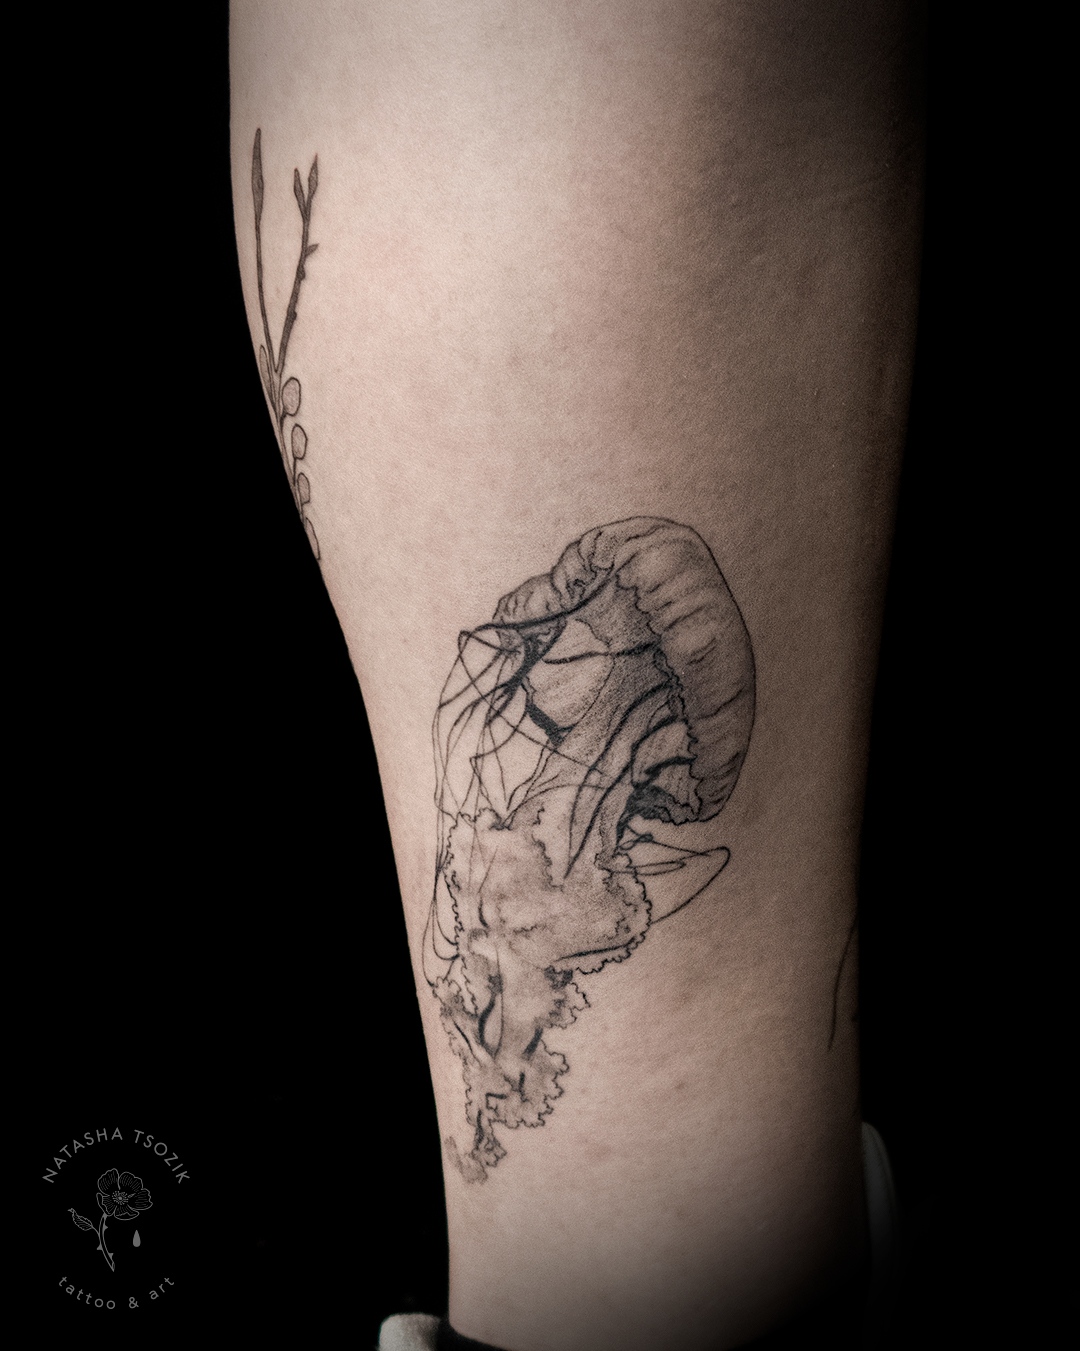 Jellyfish tattoo by Natasha Tsozik